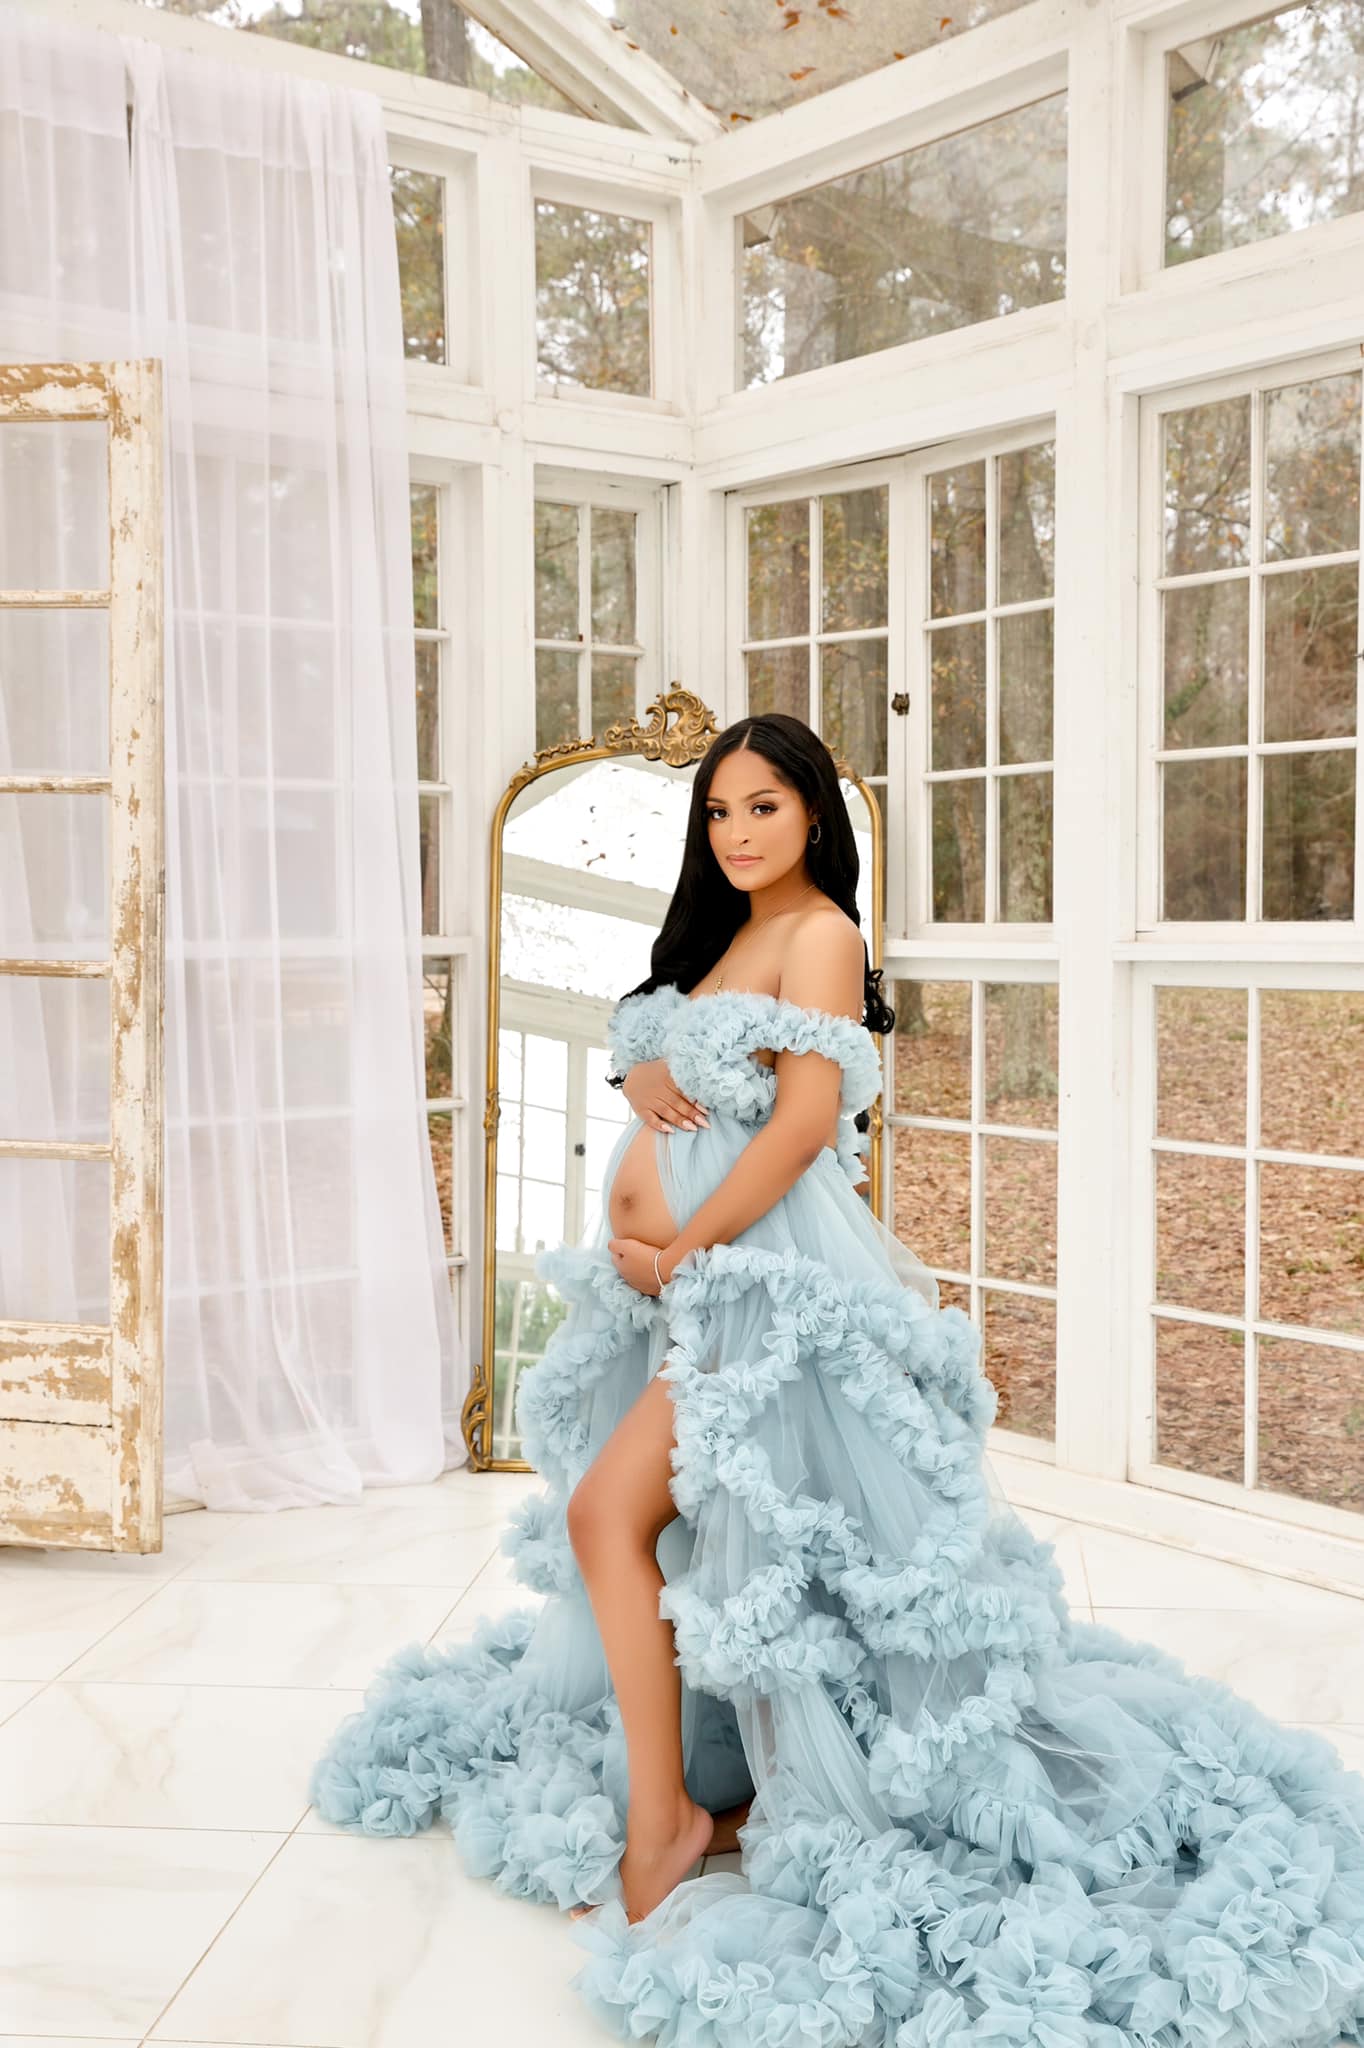 Baby Blue Dreamy Dress - maternity photoshoot dress